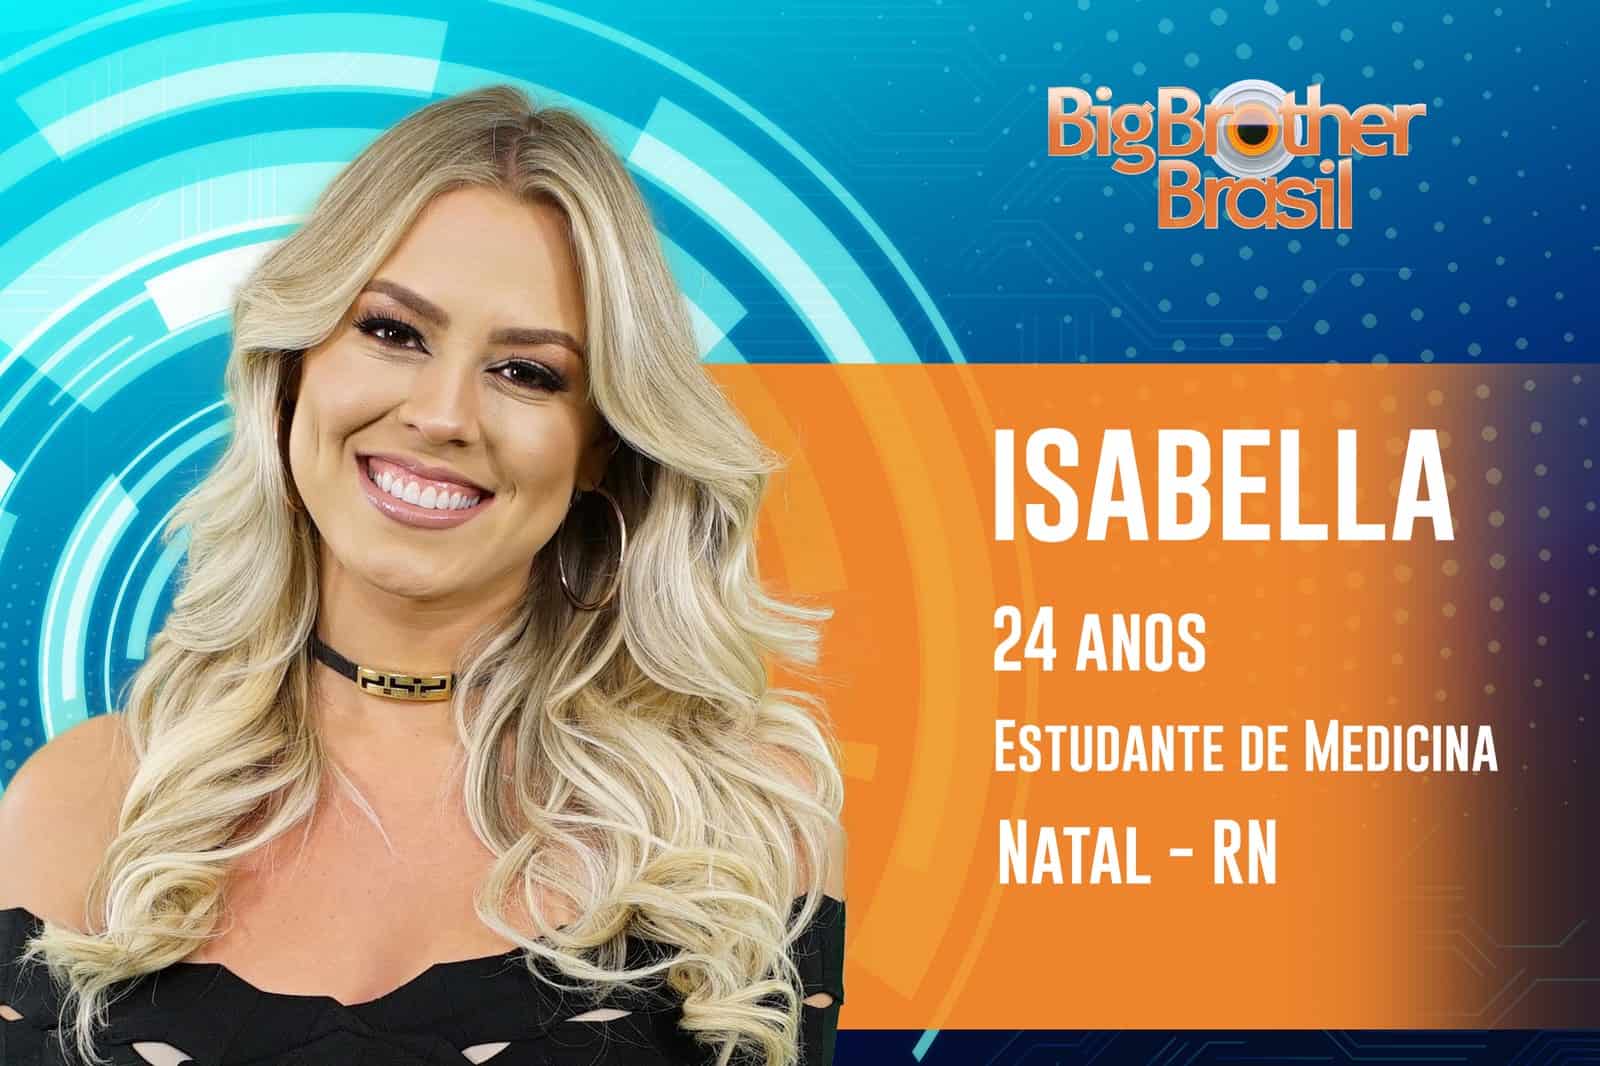 BBB 2019: Organização de concurso nega que Isabella seja Miss